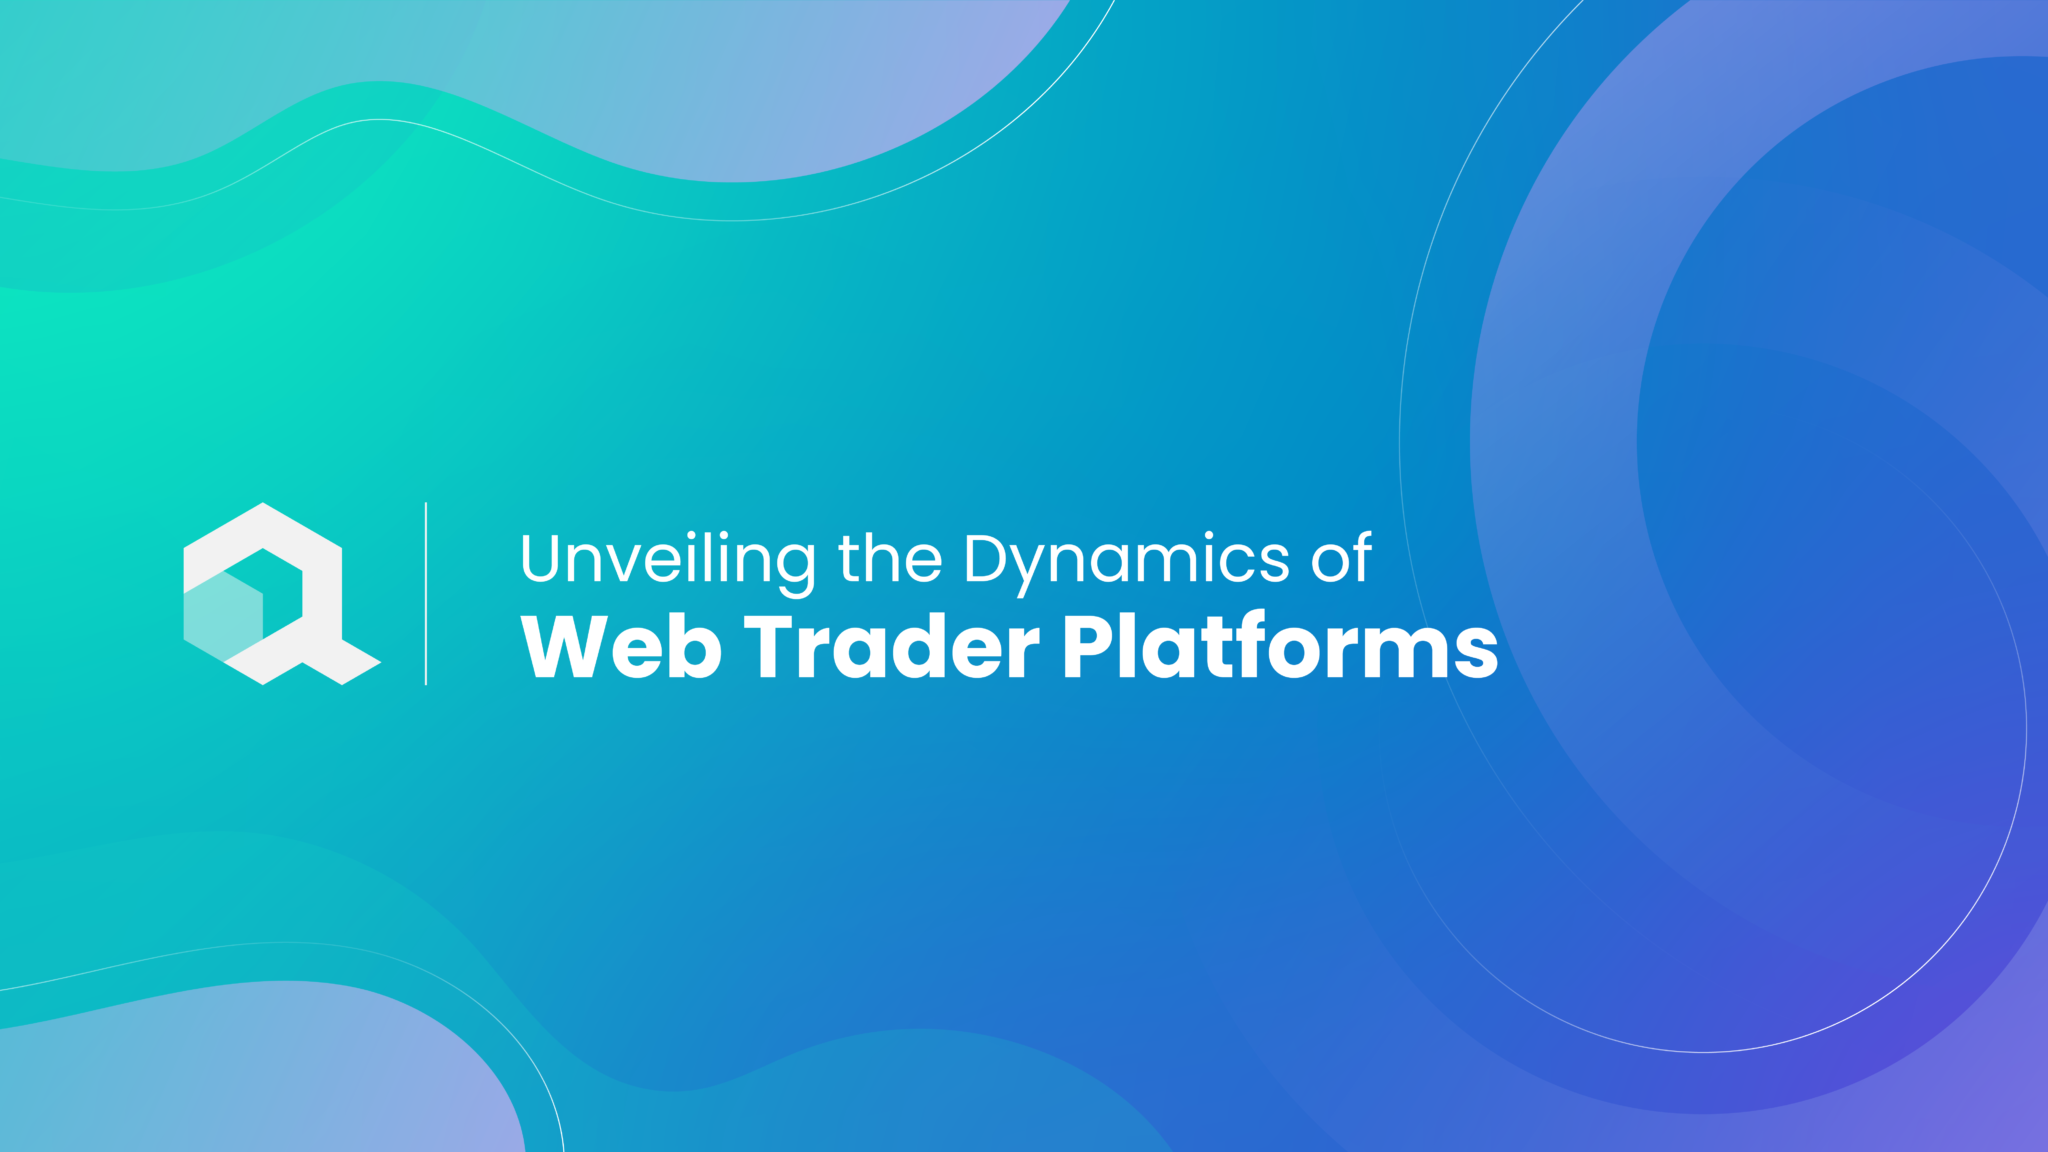 Web Trader Platforms: Your Gateway to Online Trading